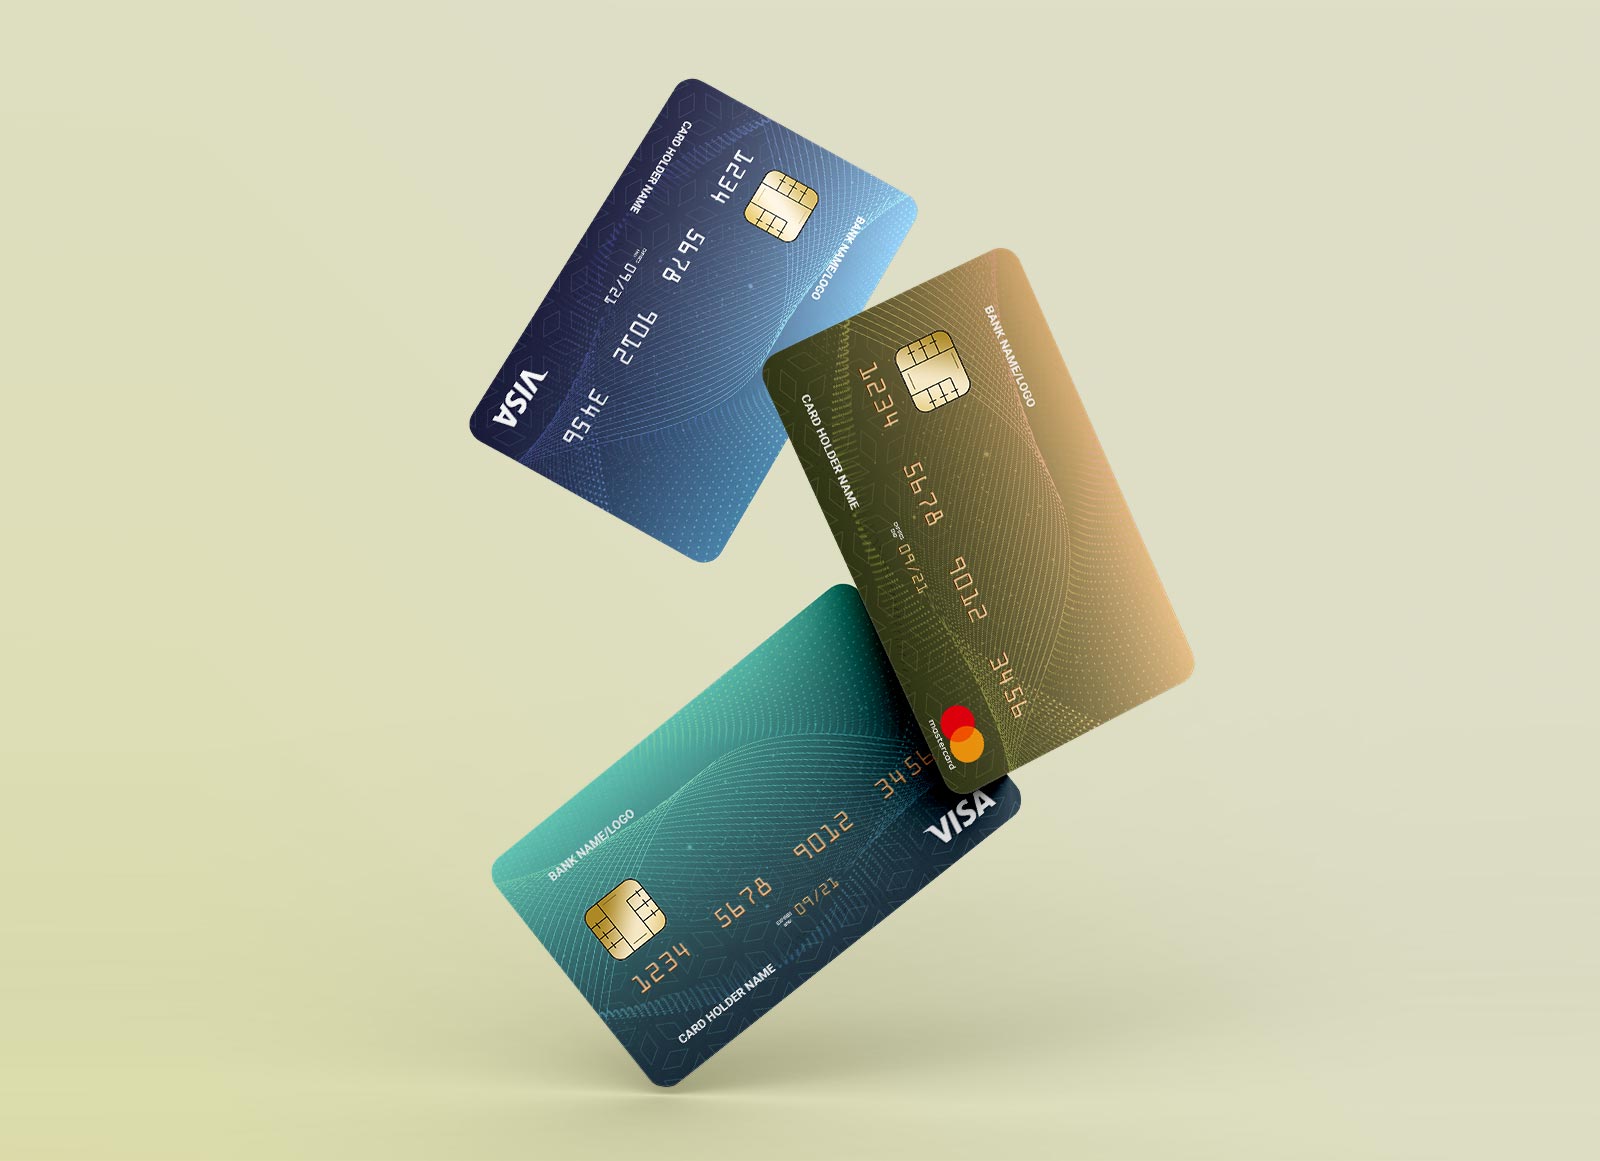 Maqueta de tarjetas bancarias de crédito / débito flotante